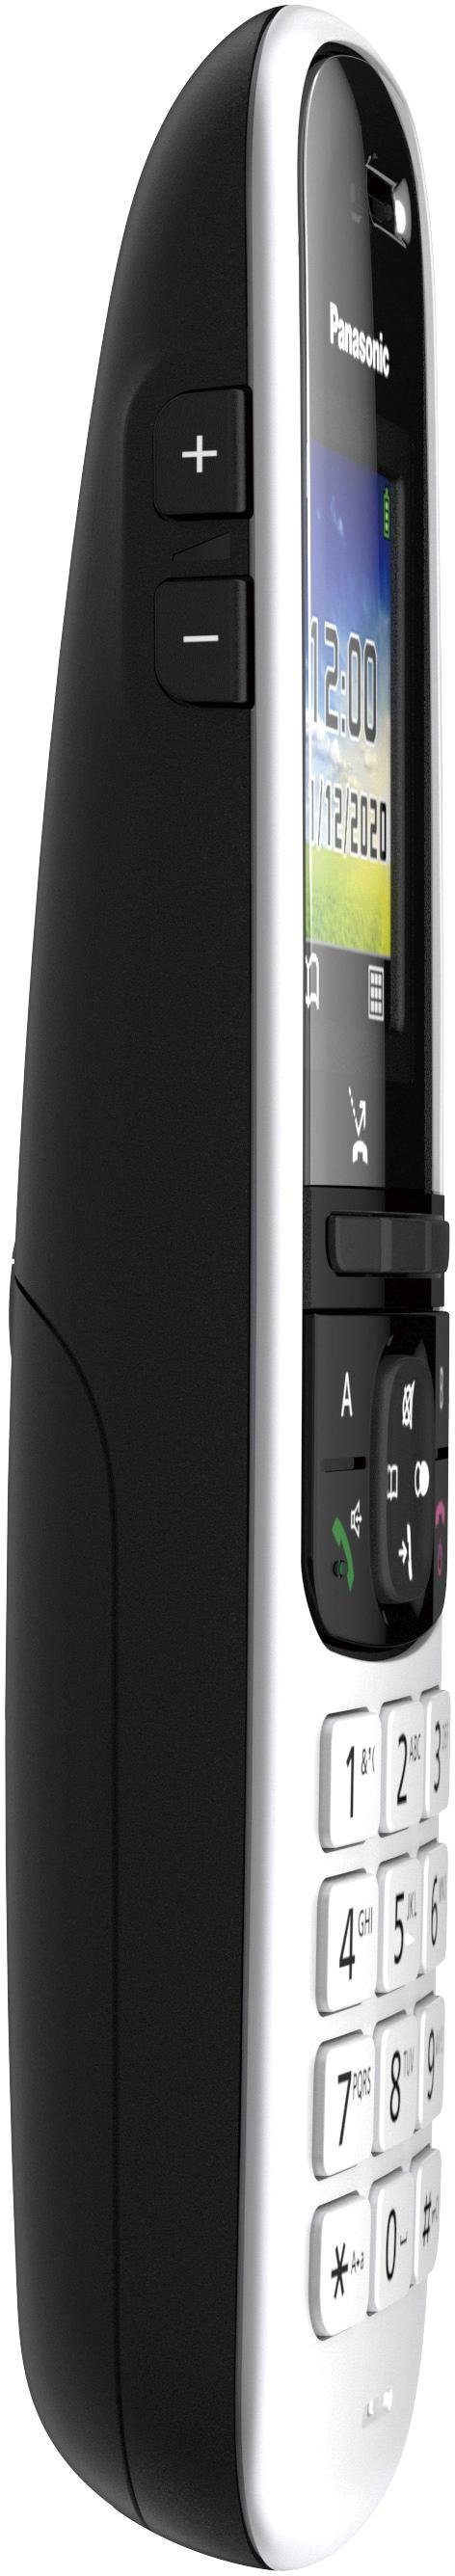 Panasonic 1) schwarz (Mobilteile: Schnurloses DECT-Telefon KX-TGH710